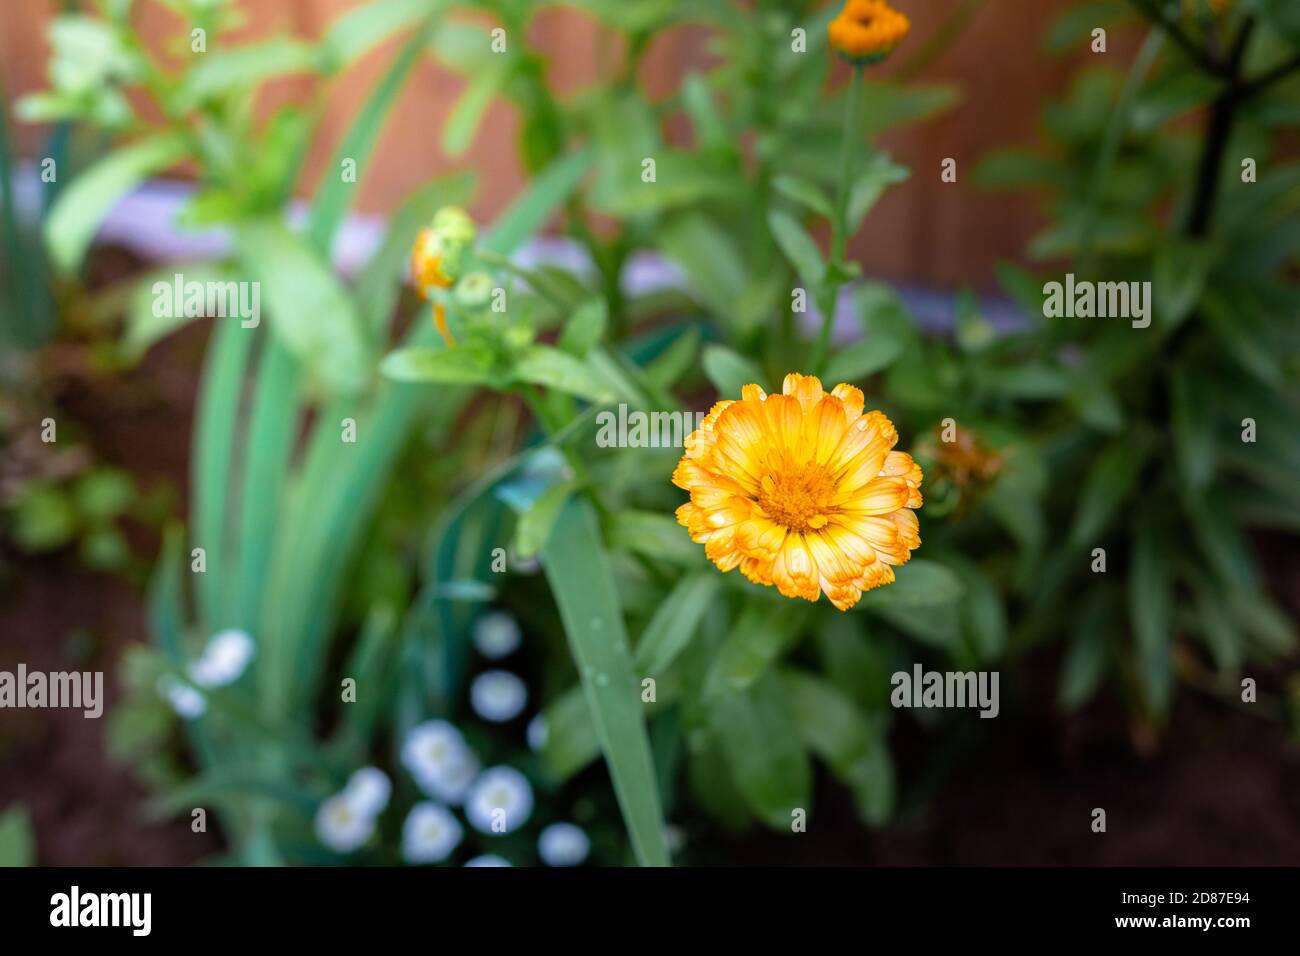 One yellow flower in the garden. Macro. Stock Photo